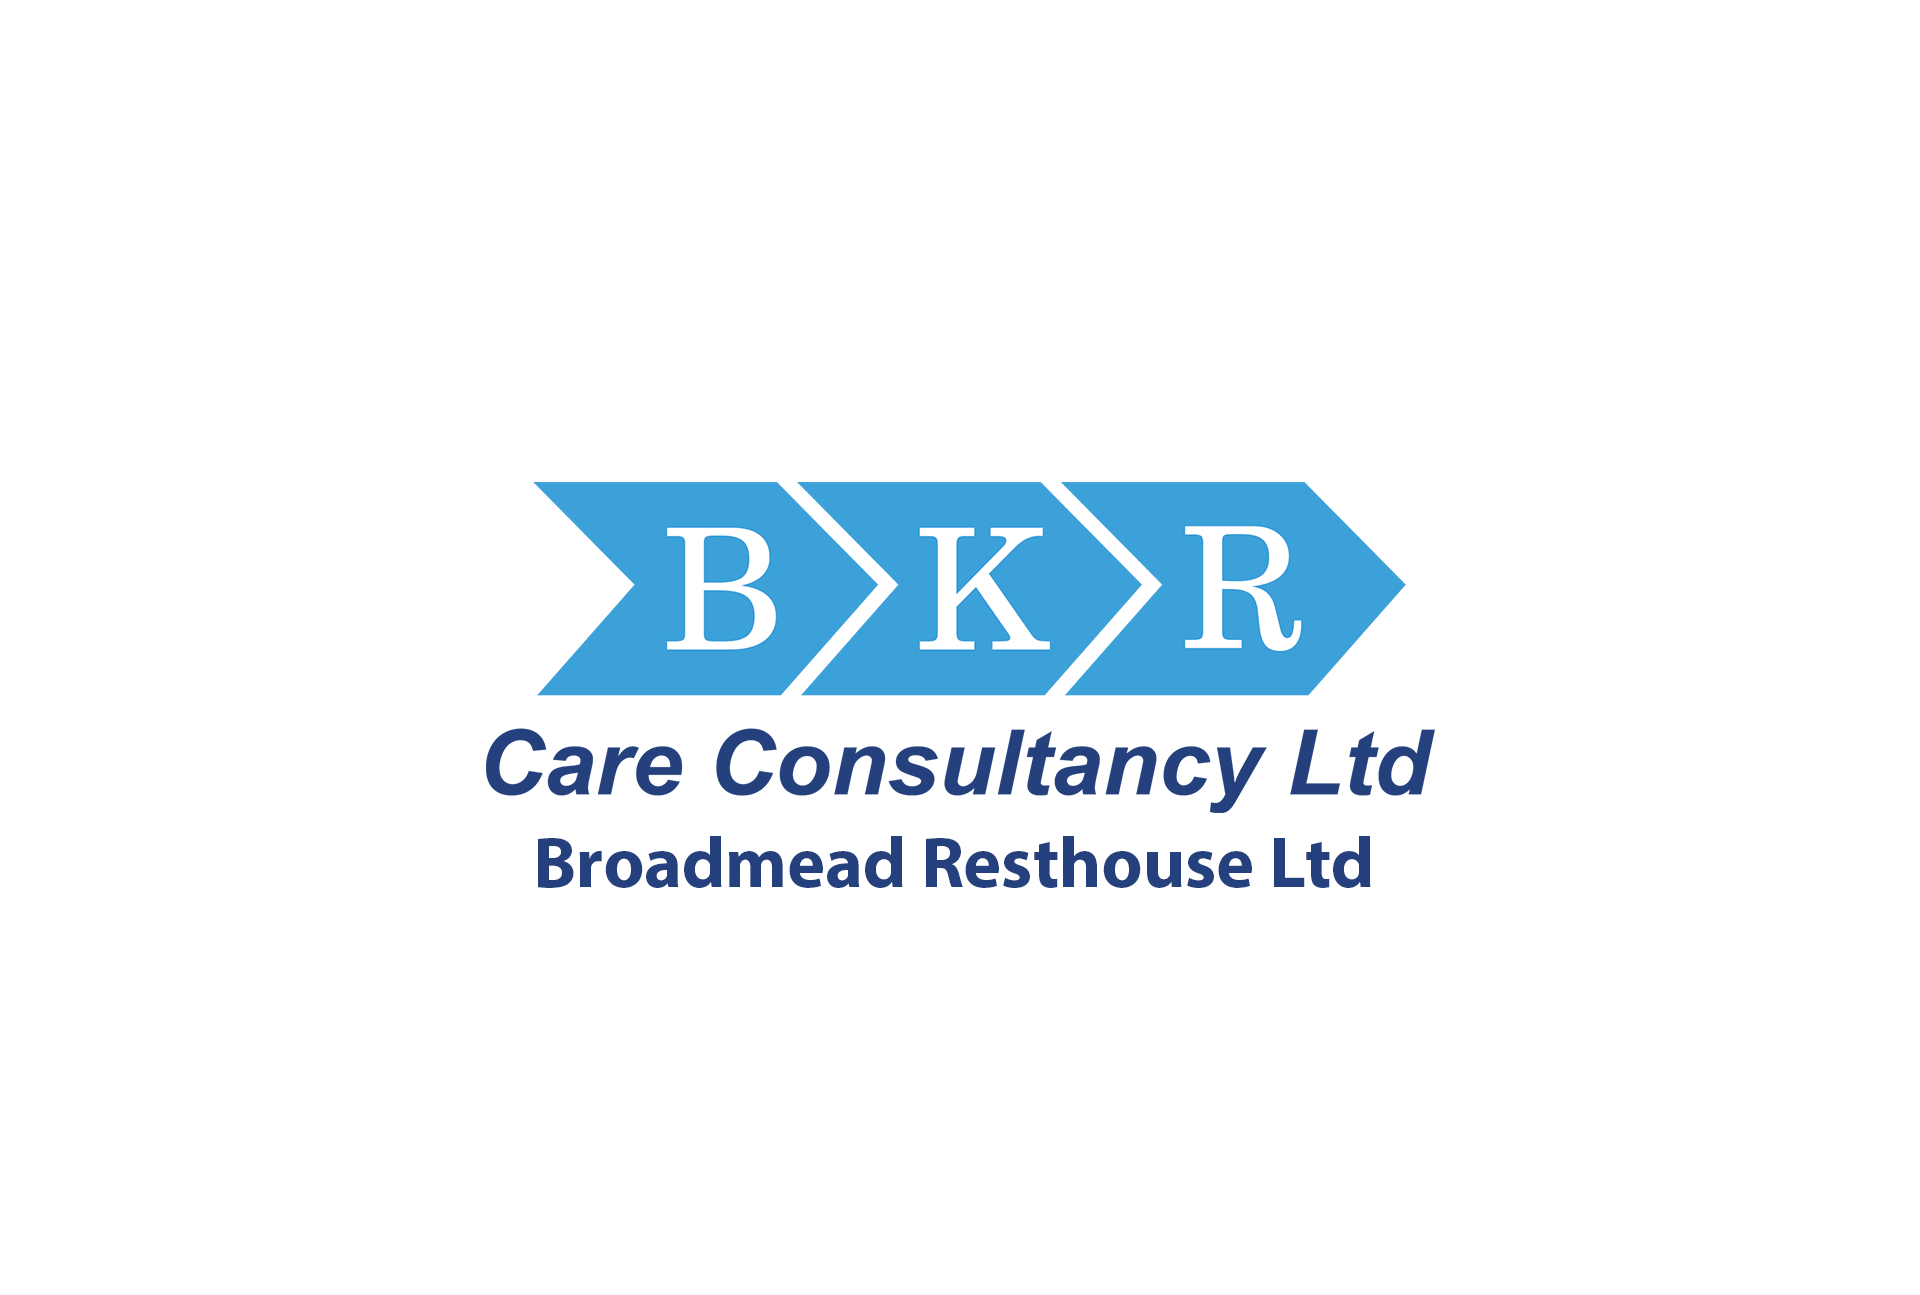 Broadmead Resthouse Ltd